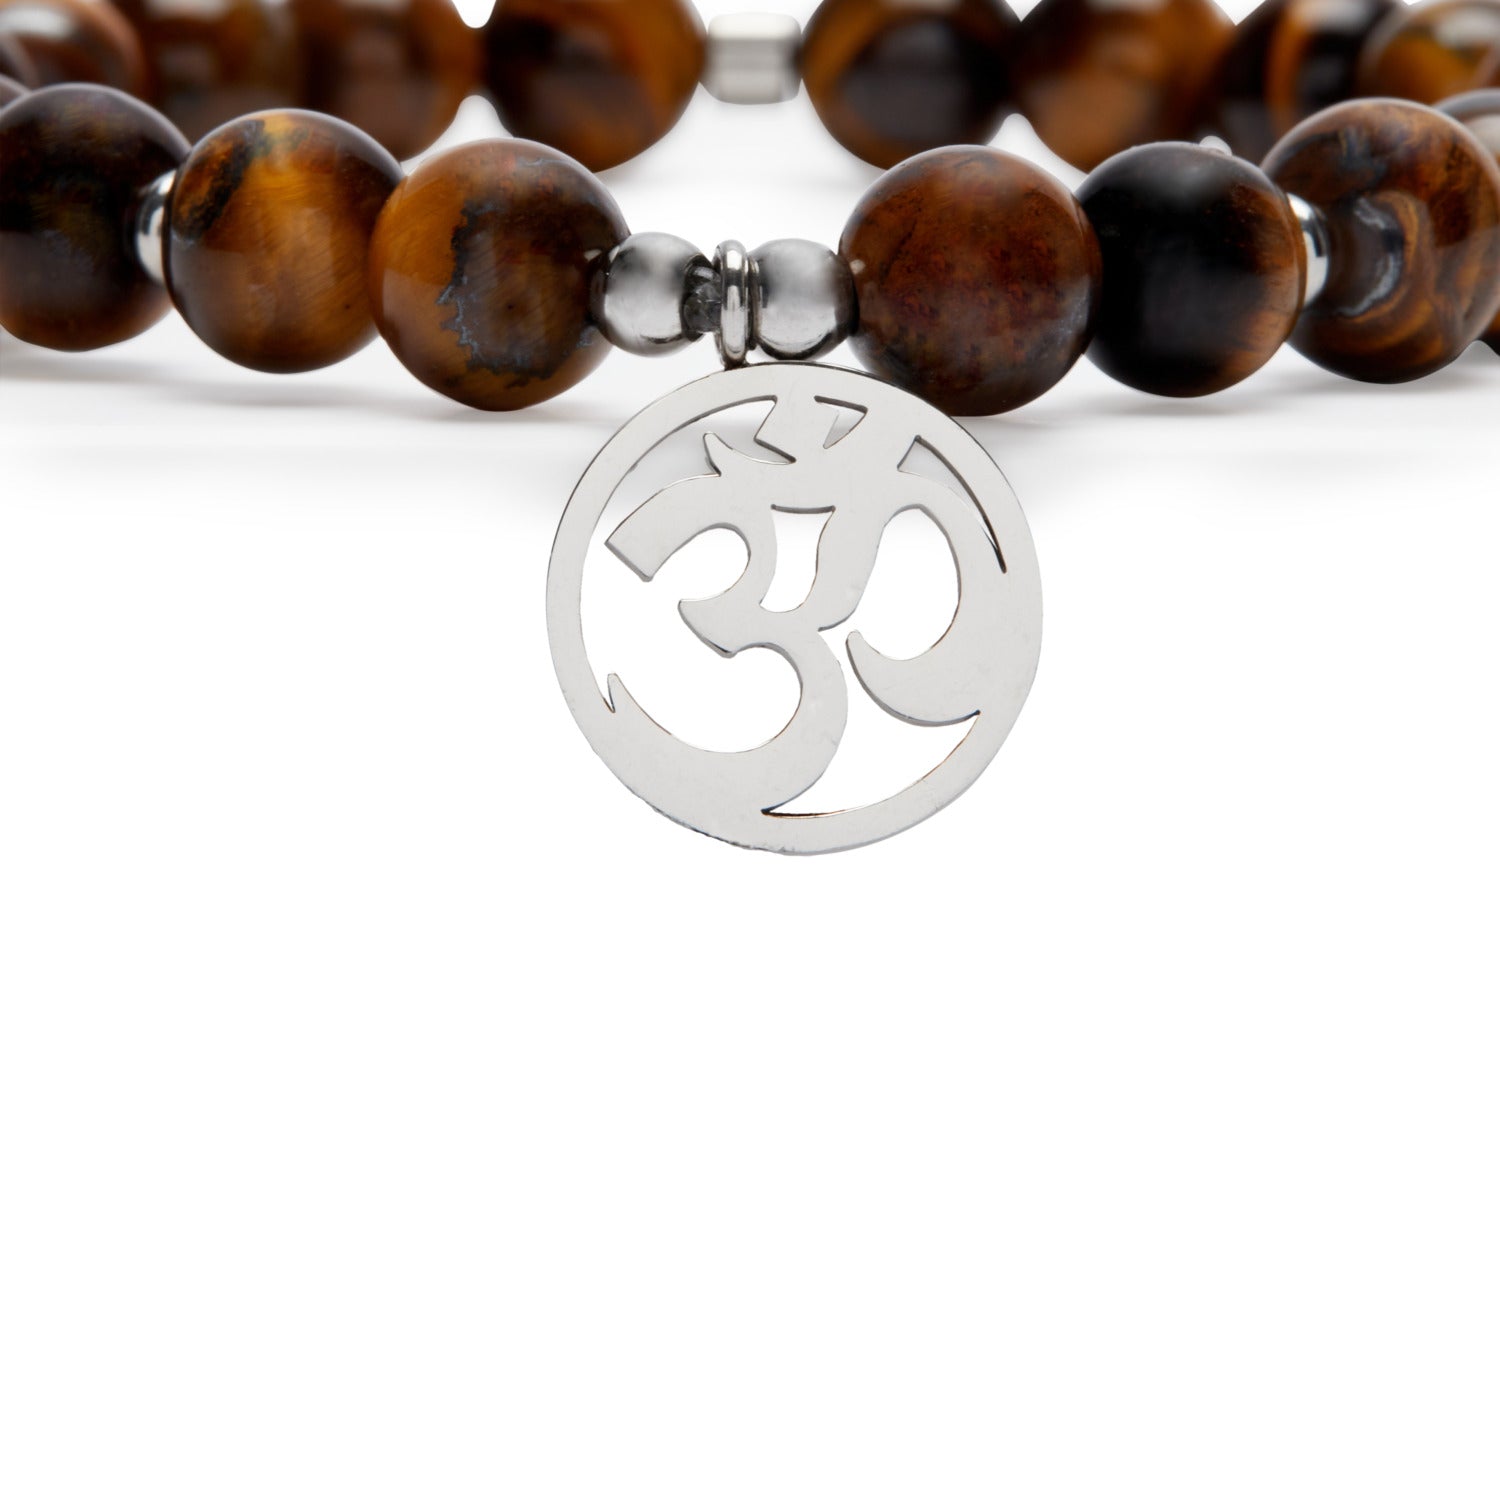 Bracelet "OM" en Oeil de Tigre - Karma Yoga Shop